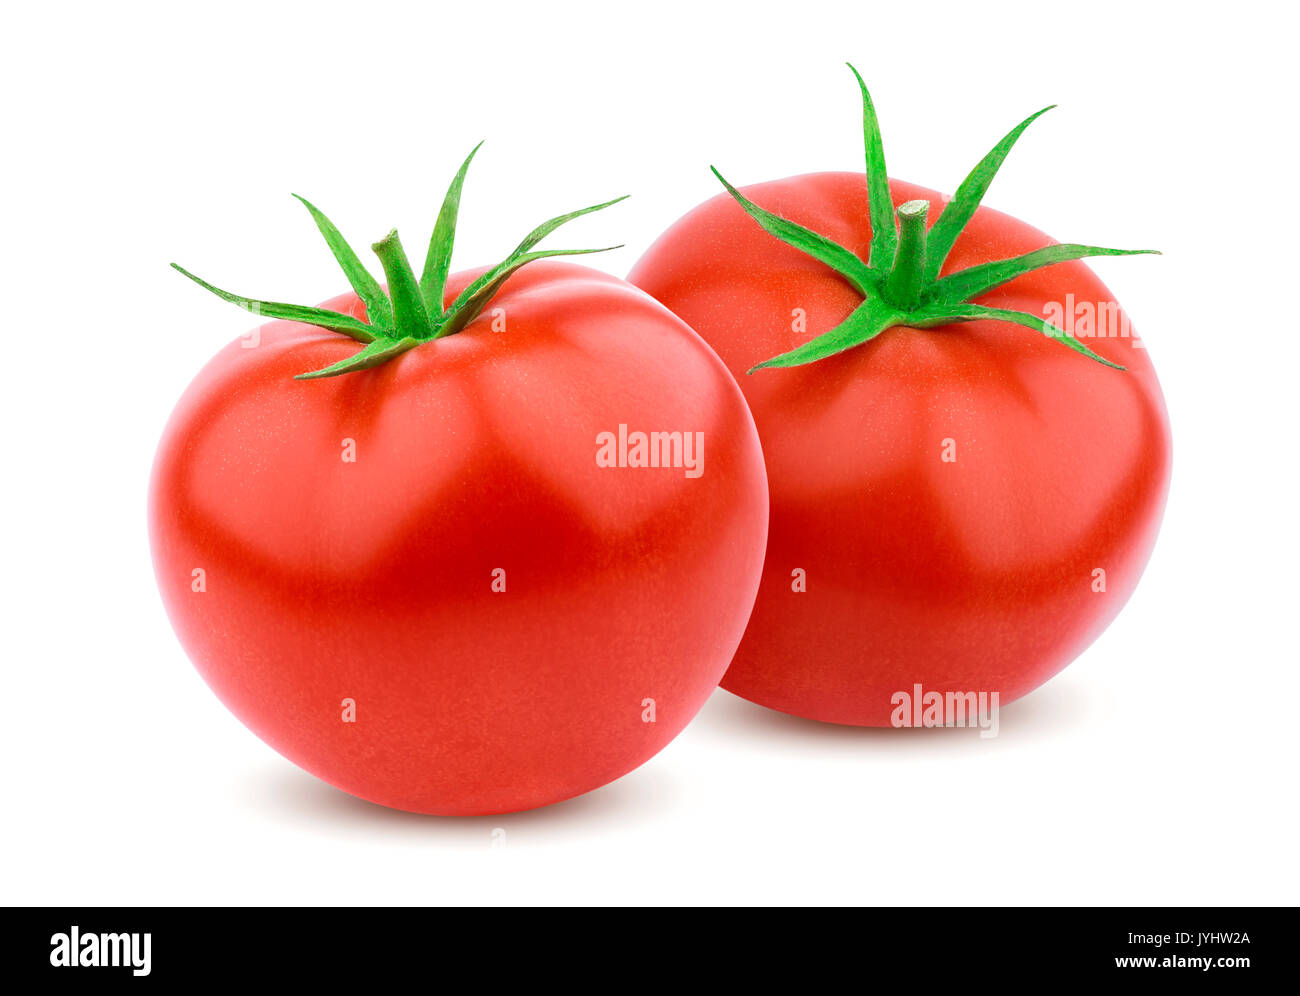 Two whole tomatoes isolated on white background Stock Photo